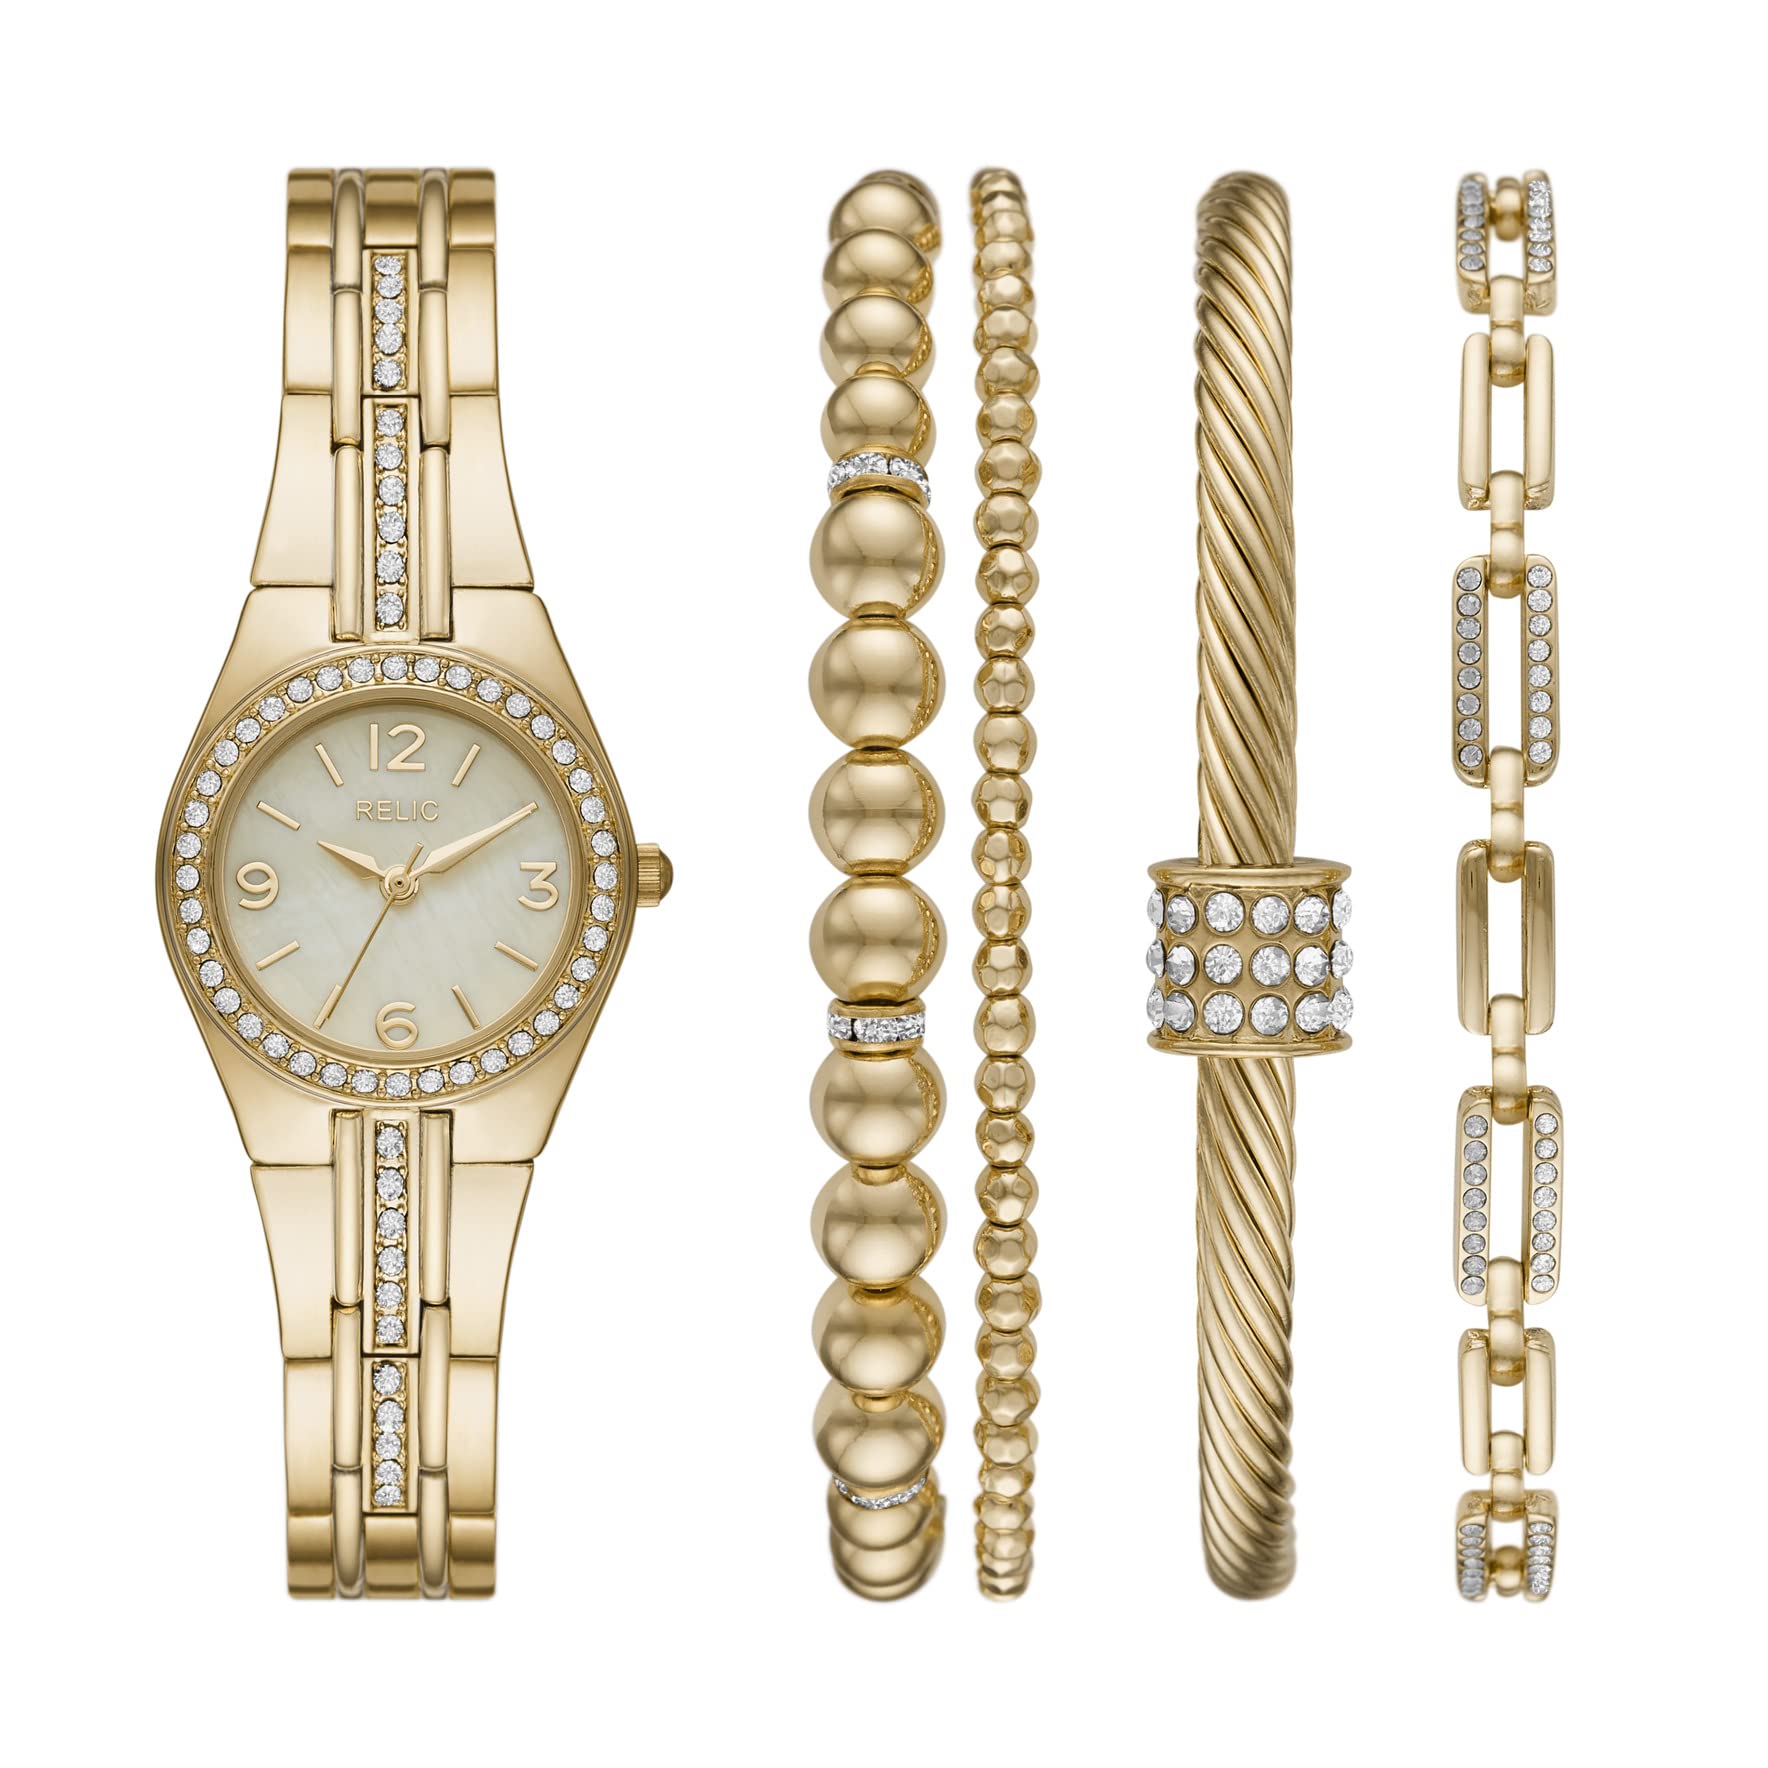 Queens Court Three-Hand Gold Tone Metal Watch Gift Set with Bracelet Accessories Model ZR97005